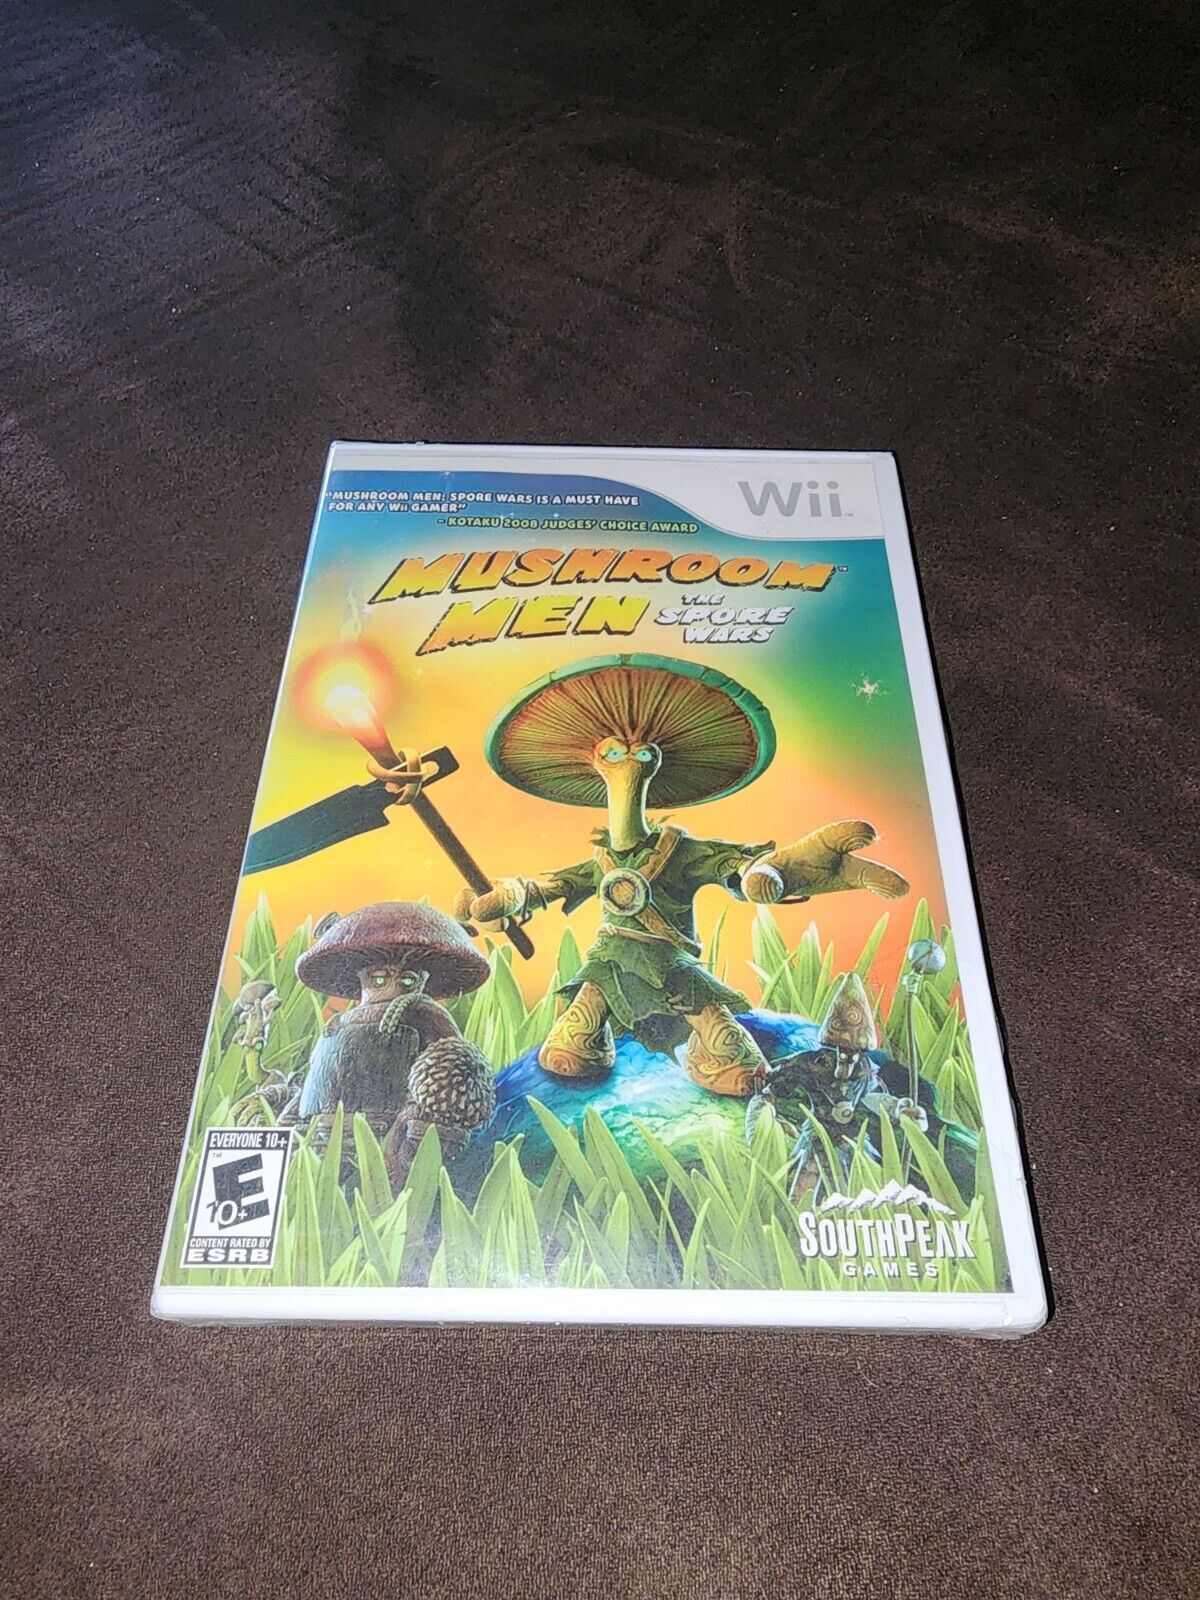 Mushroom Men: The Spore Wars Nintendo Wii Rare Wii Cover Art Variant Sealed New